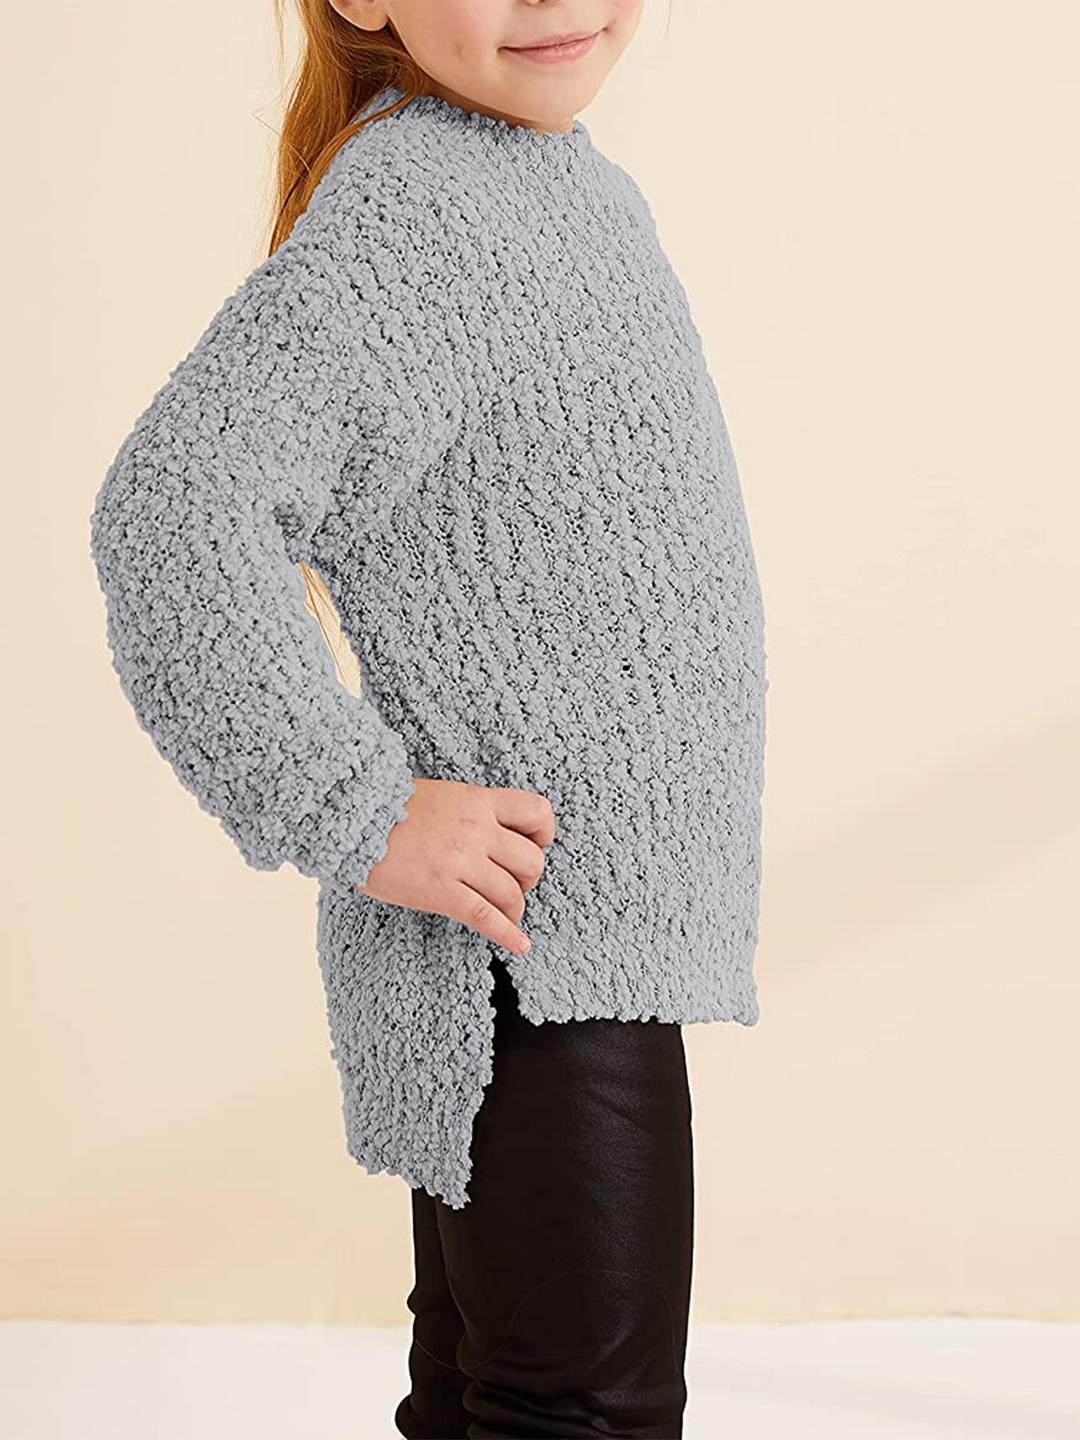 Girls Sweaters Fuzzy Knit Kids Cozy Popcorn Cute Long Sleeve Pullover Tops